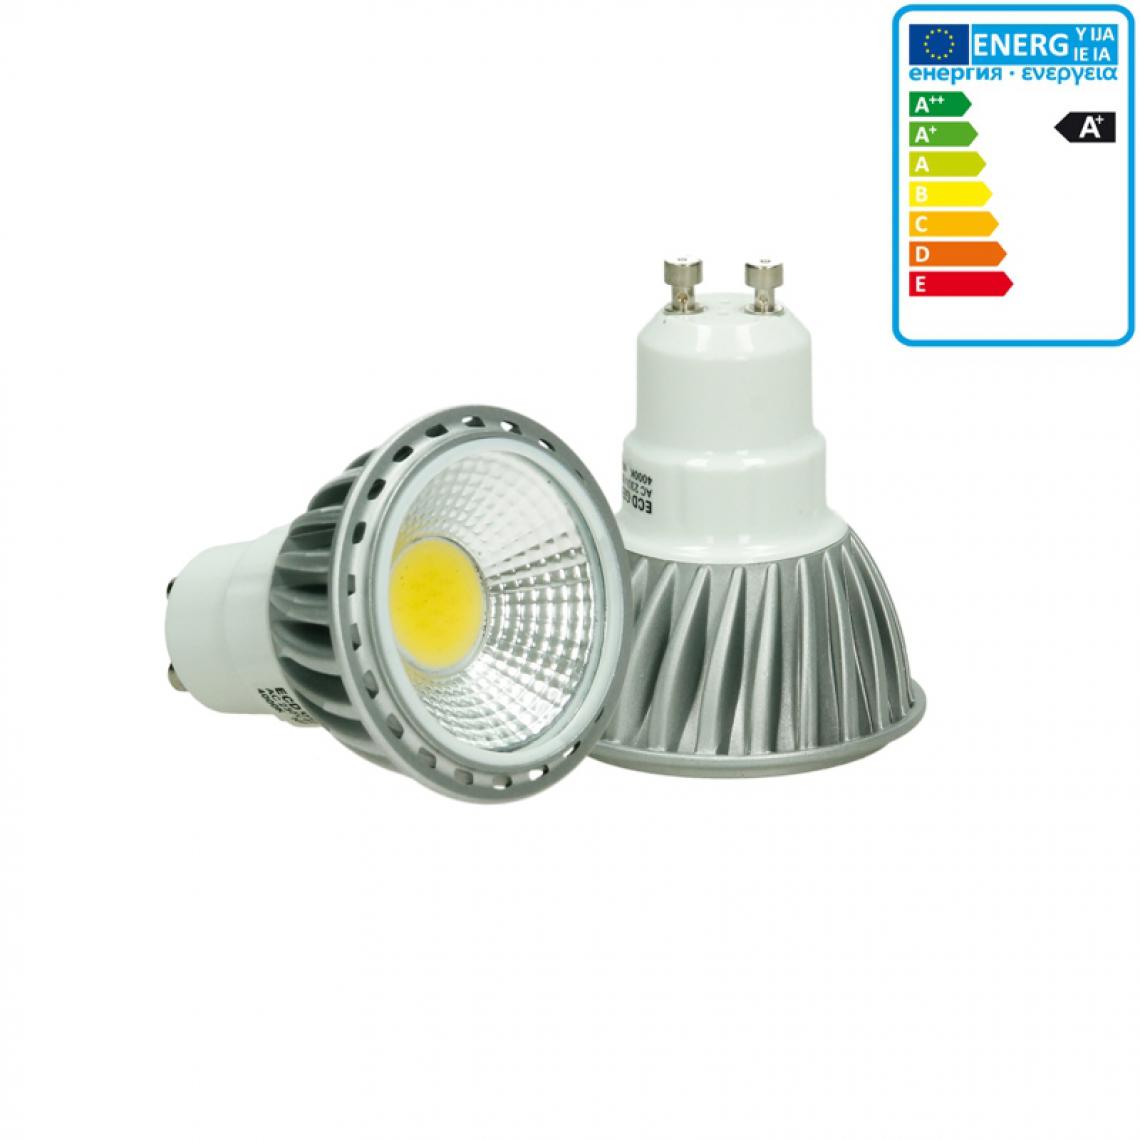 Ecd Germany - ECD Germany LED COB GU10 Spot Lampe Ampoule Blanc Froid 6W - Ampoules LED